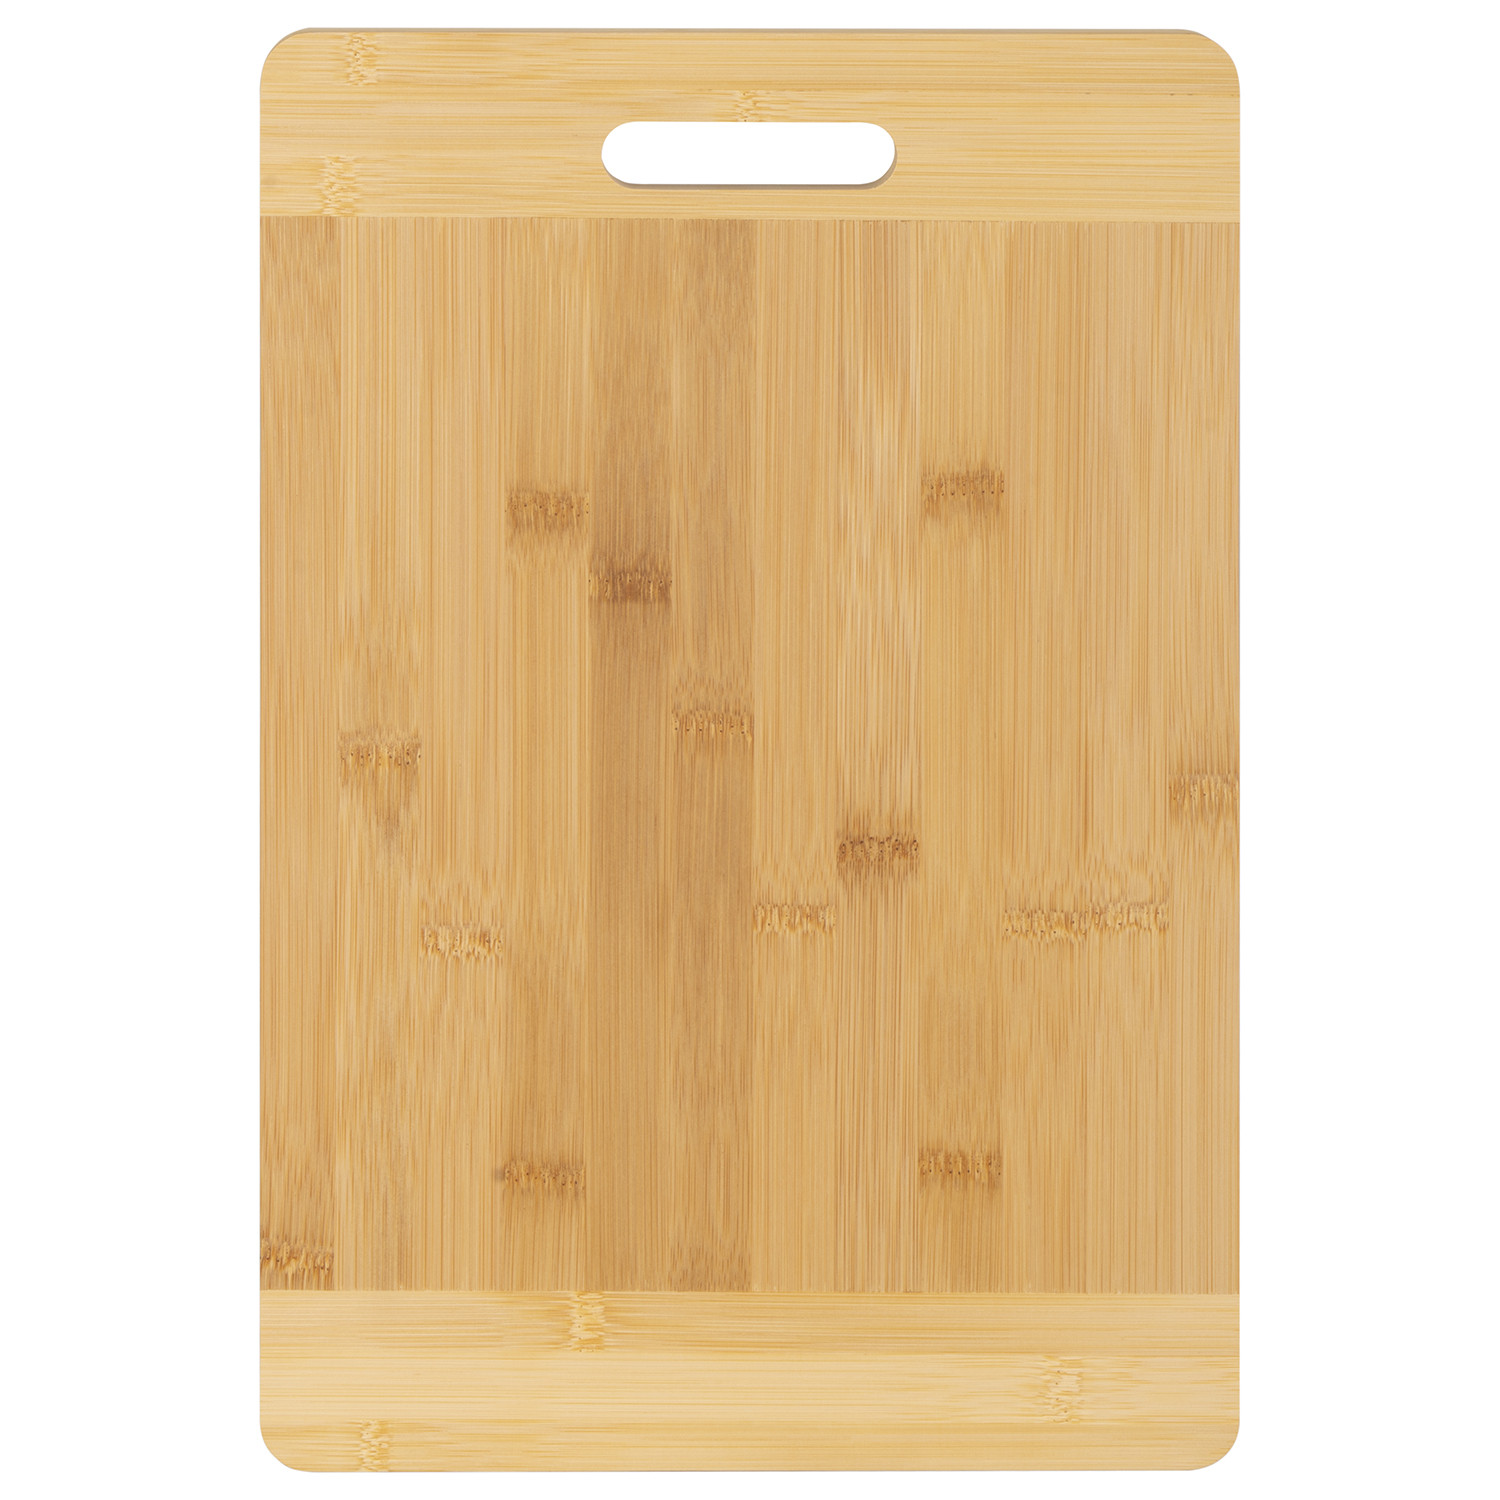 Rectangular Large Bamboo Chopping Board Image 1